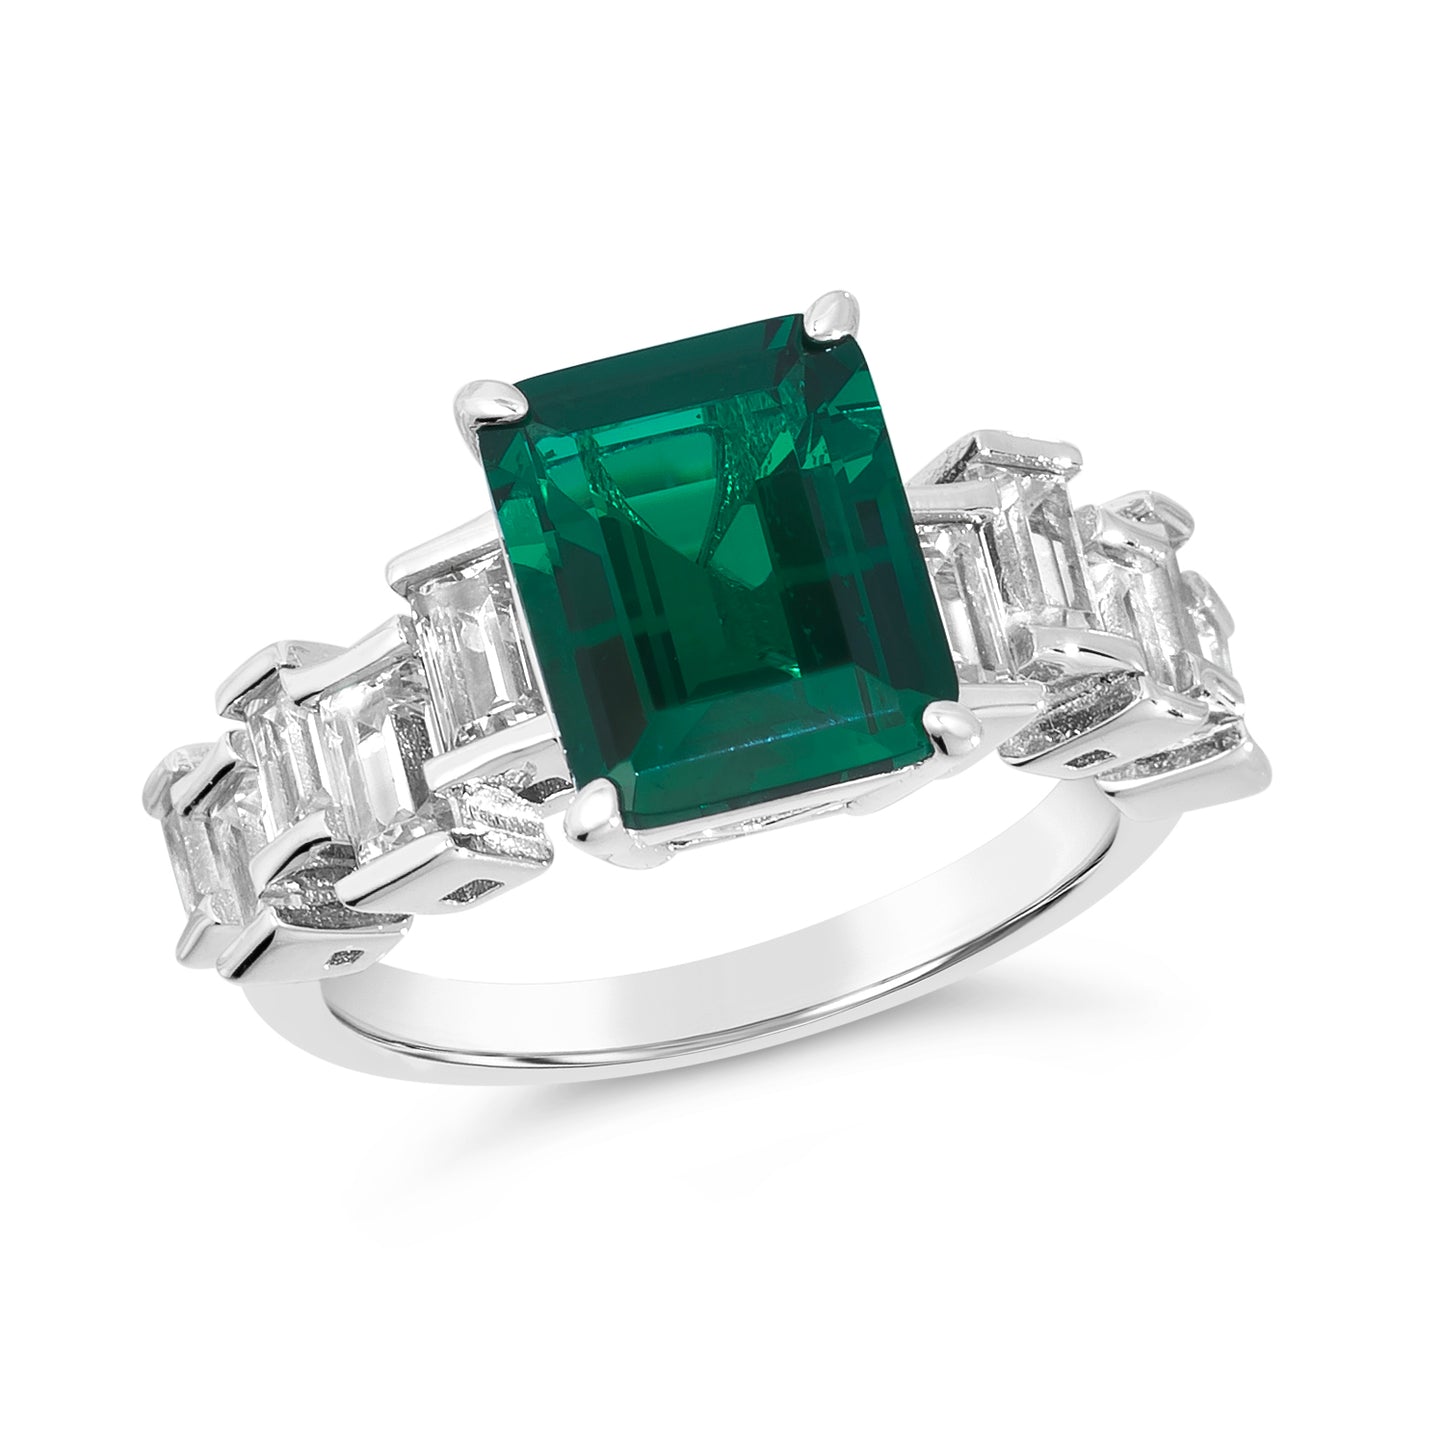 Queen Victoria Emerald Ring